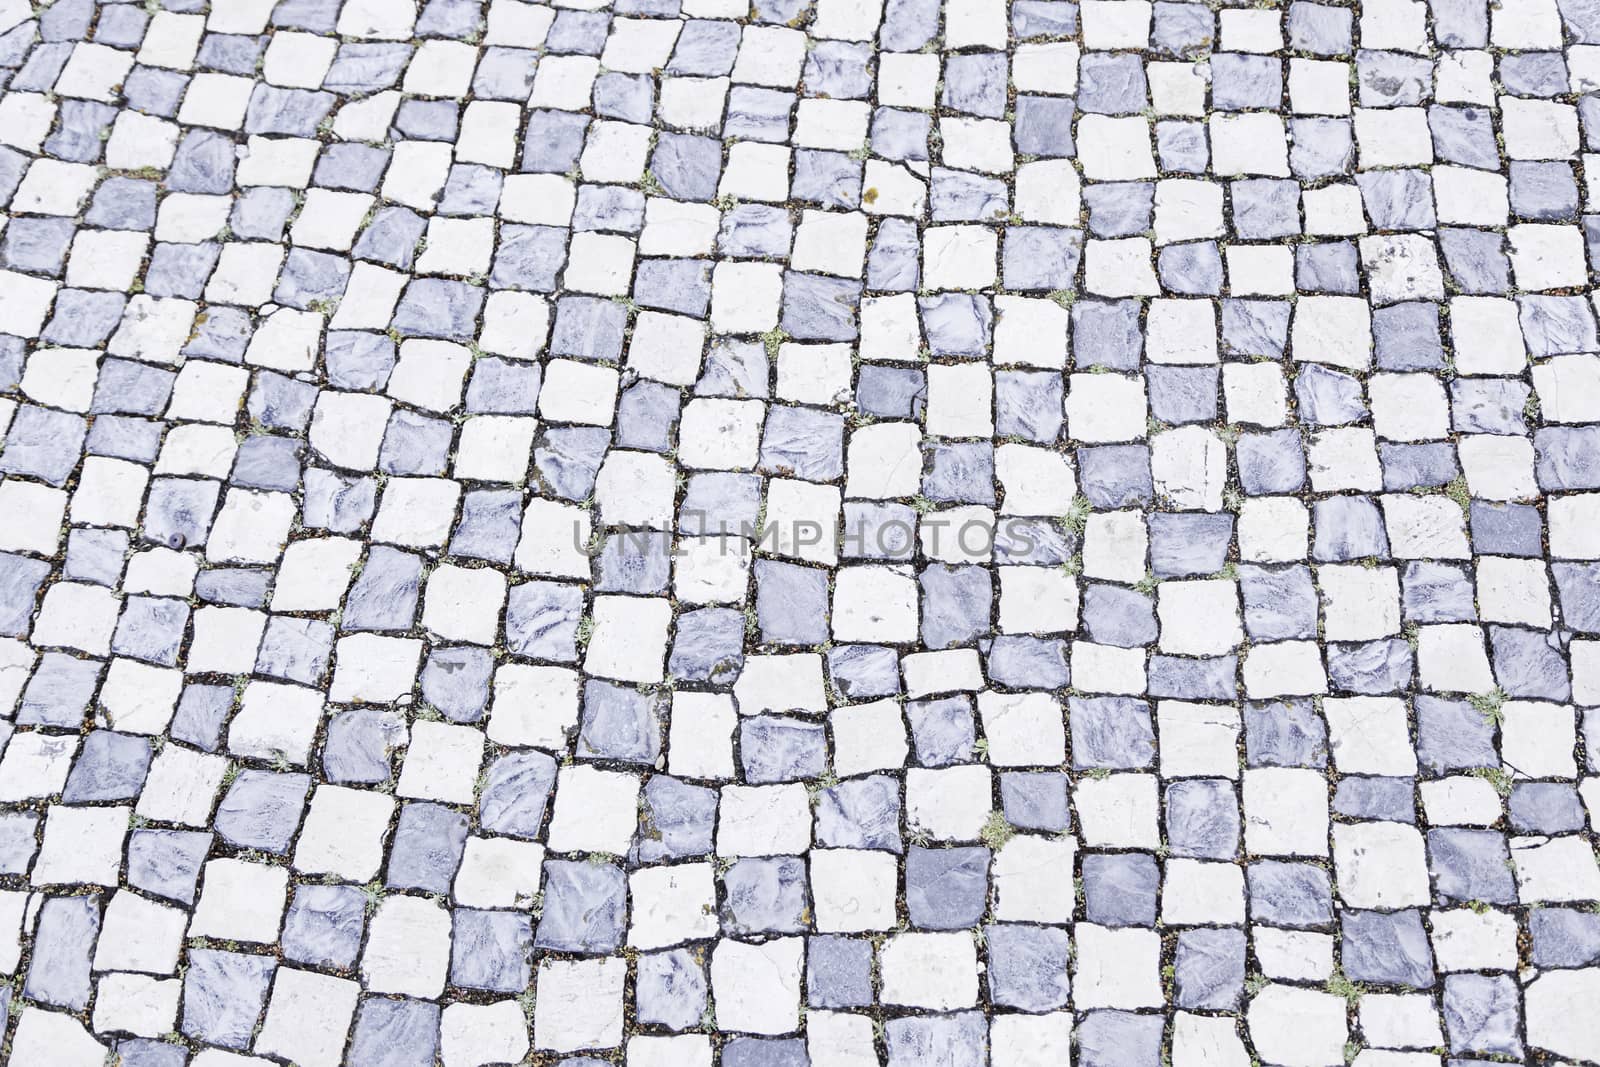 Typical stone floor of Lisbon by esebene